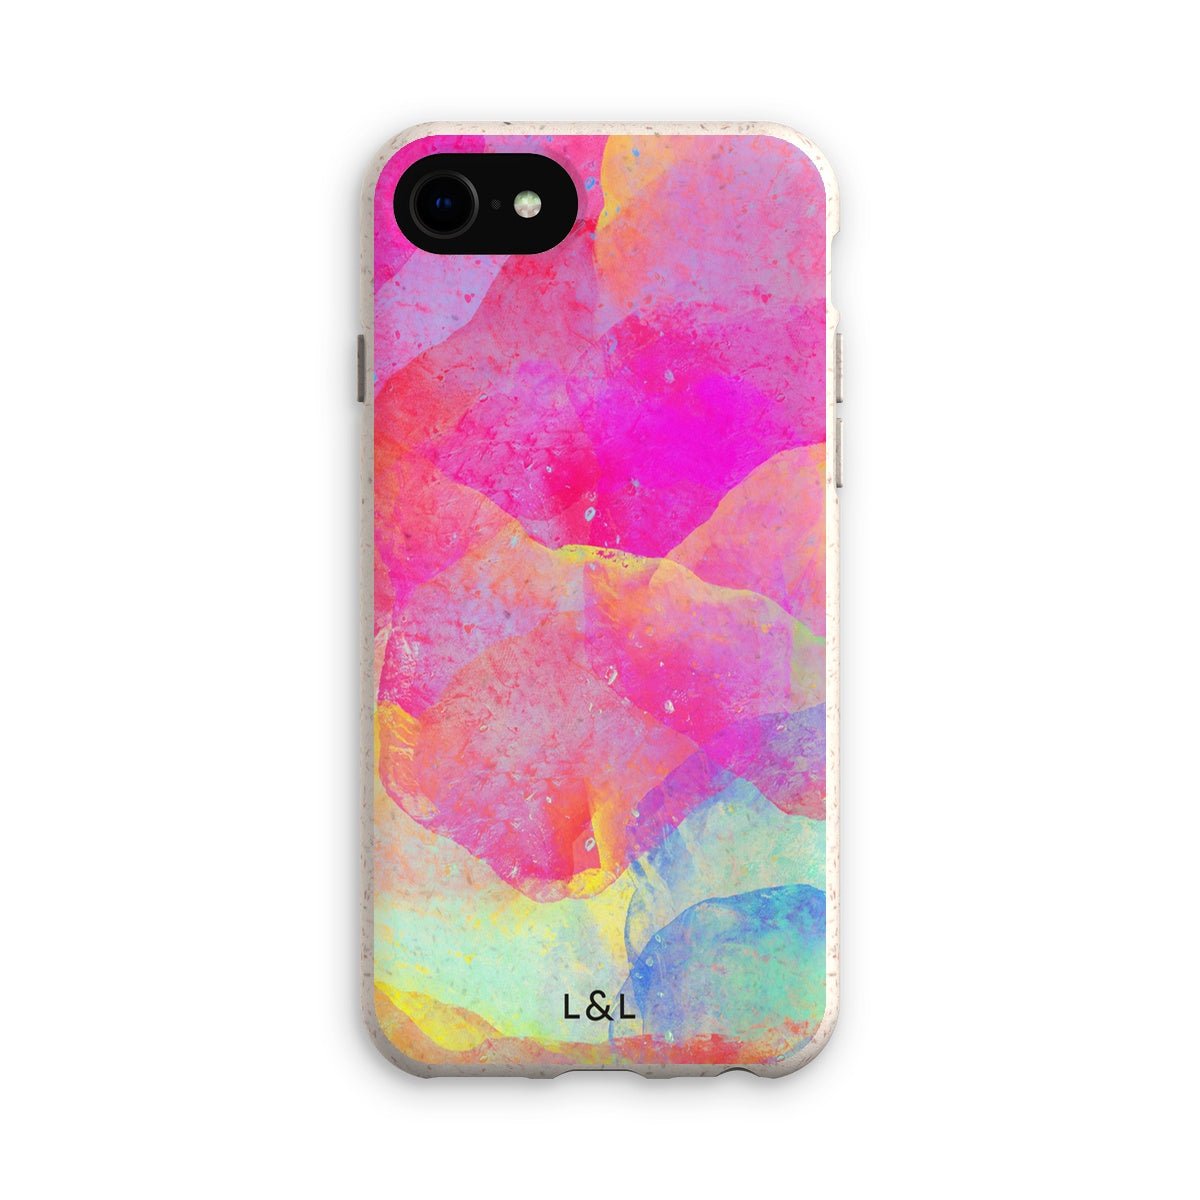 Neon Paint Eco Phone Case - Loam & Lore